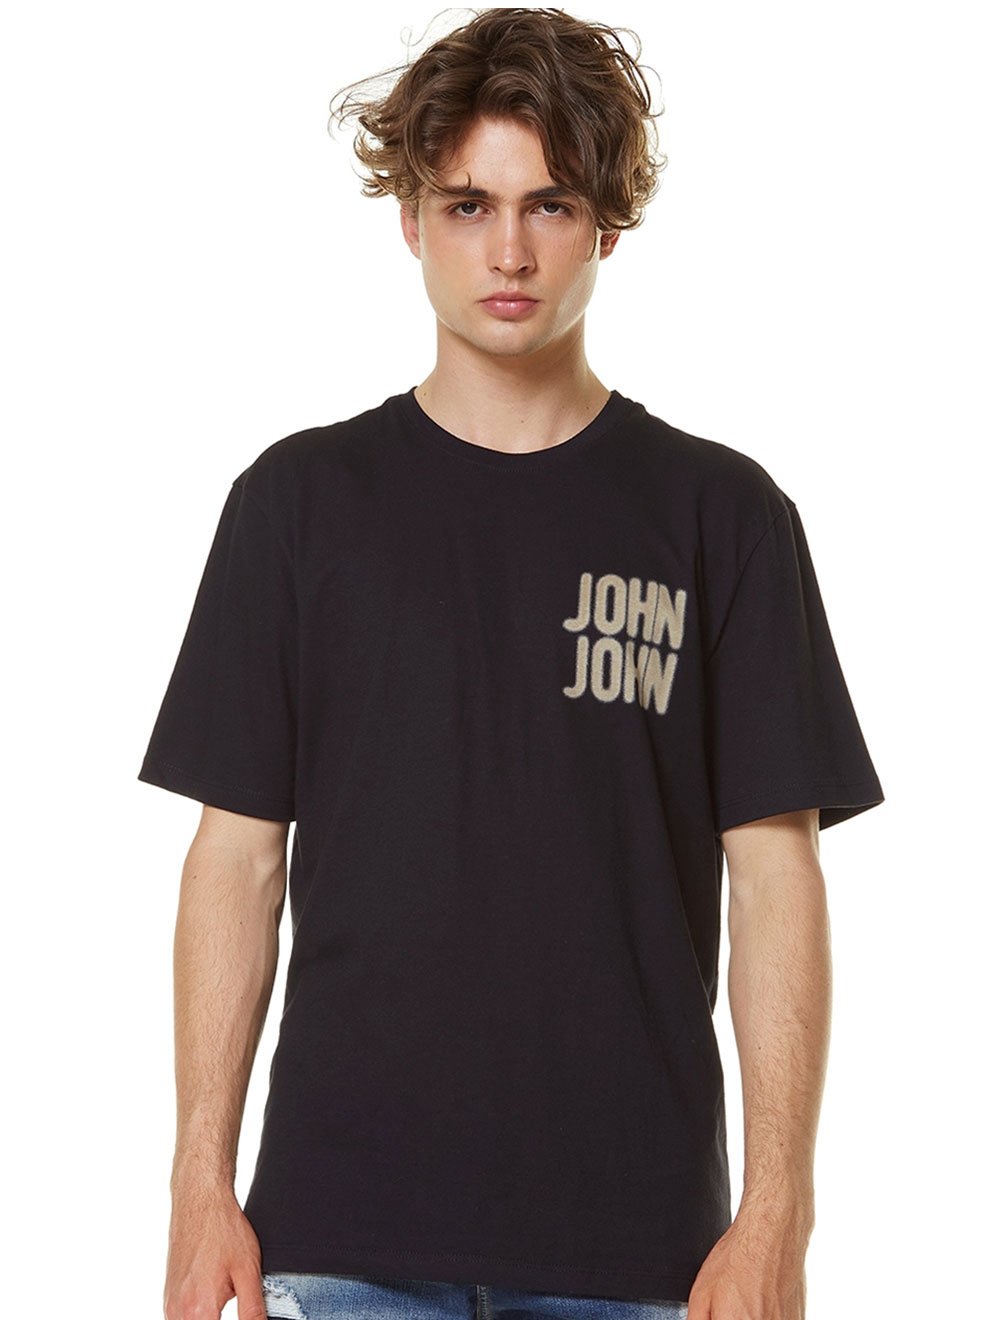 Camiseta John John RX Focus Masculina - Alcateia Moda Masculina